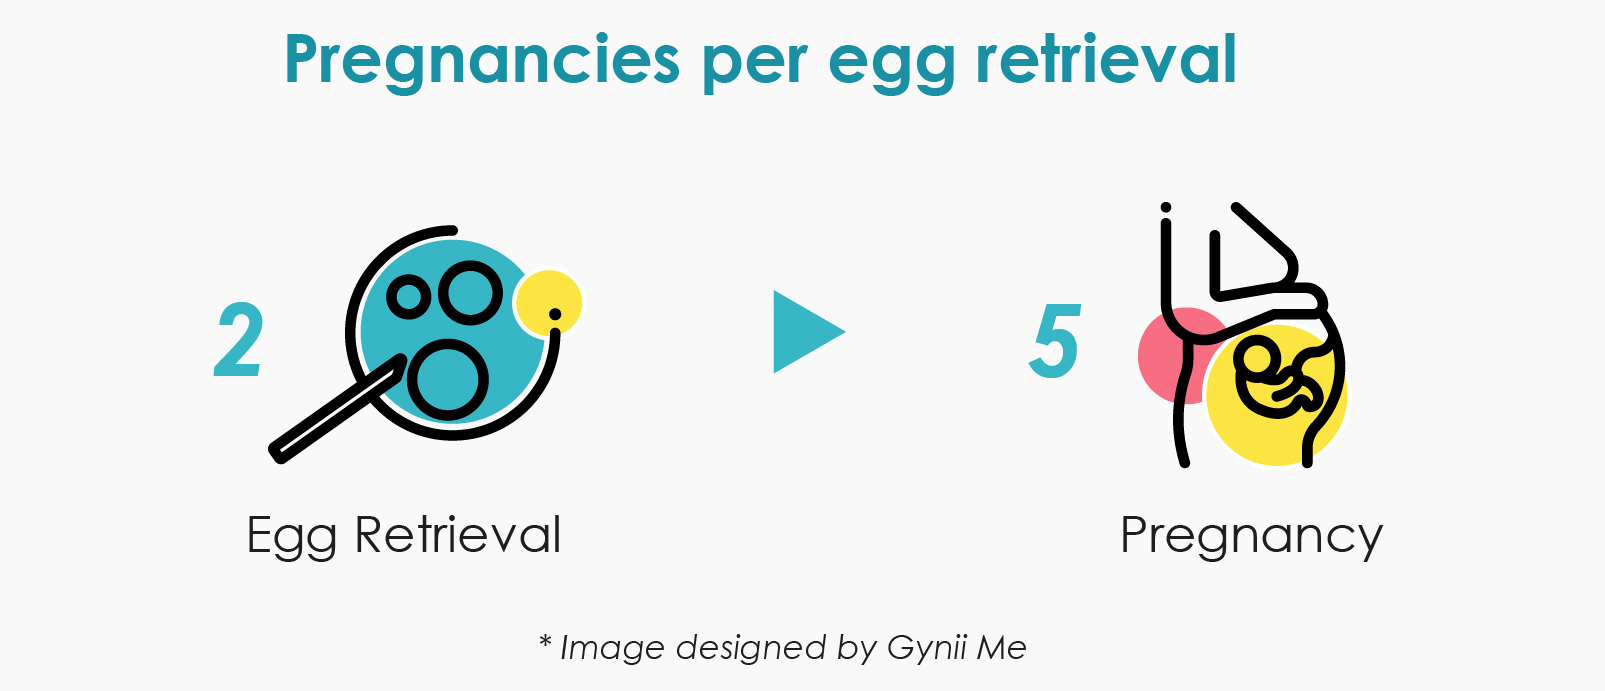 Pregnancies per egg retrieval